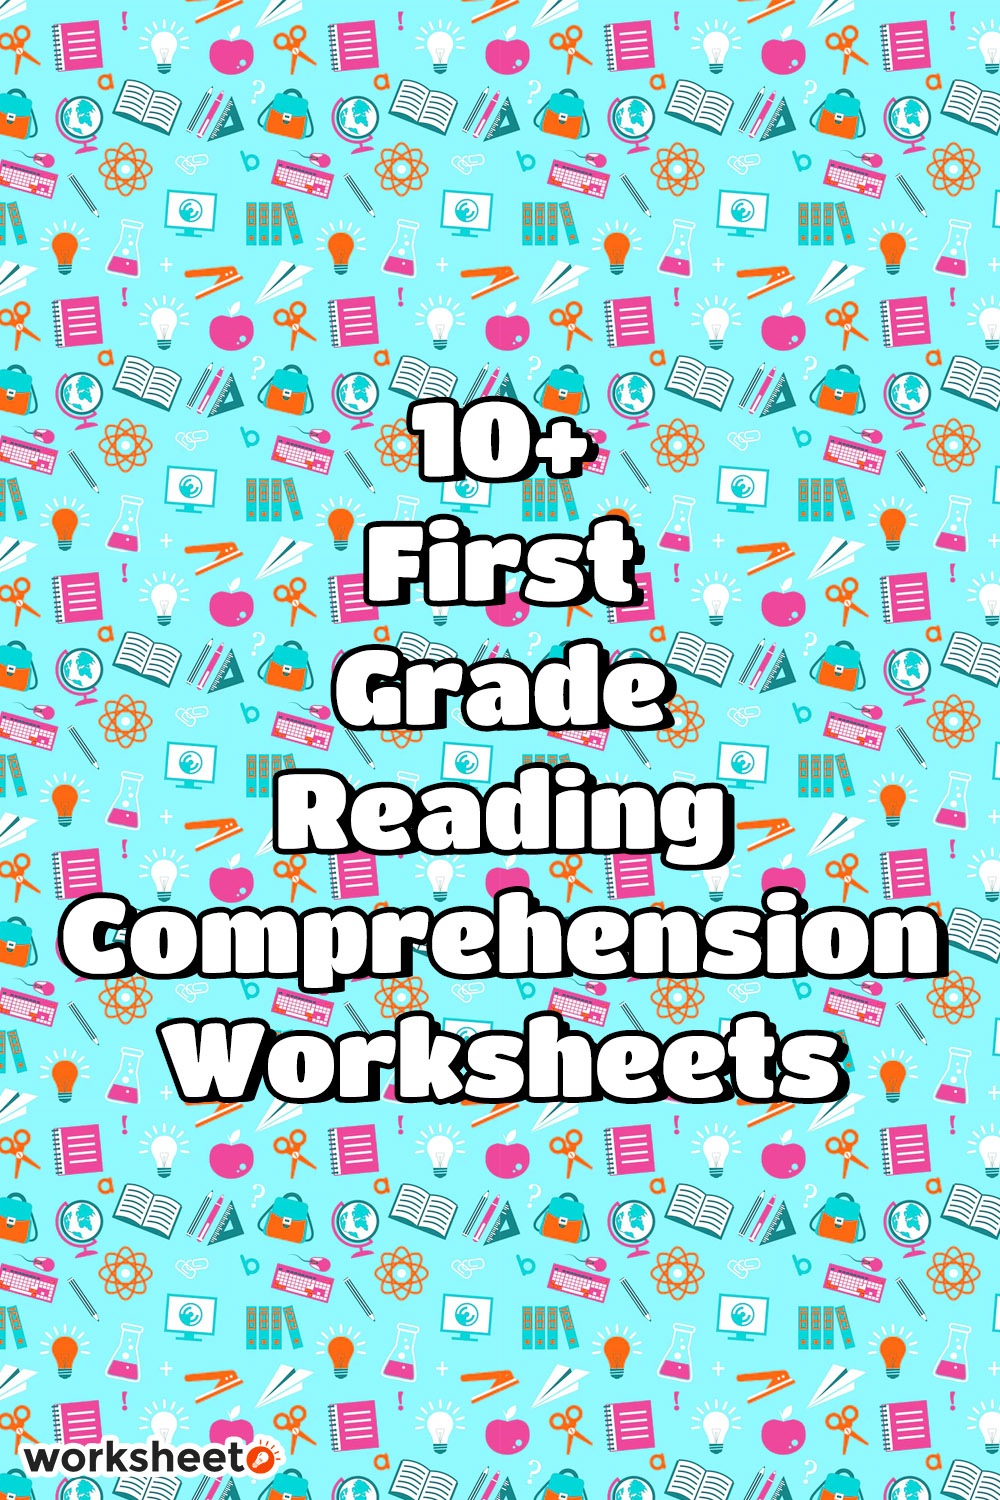 First Grade Reading Comprehension Worksheets